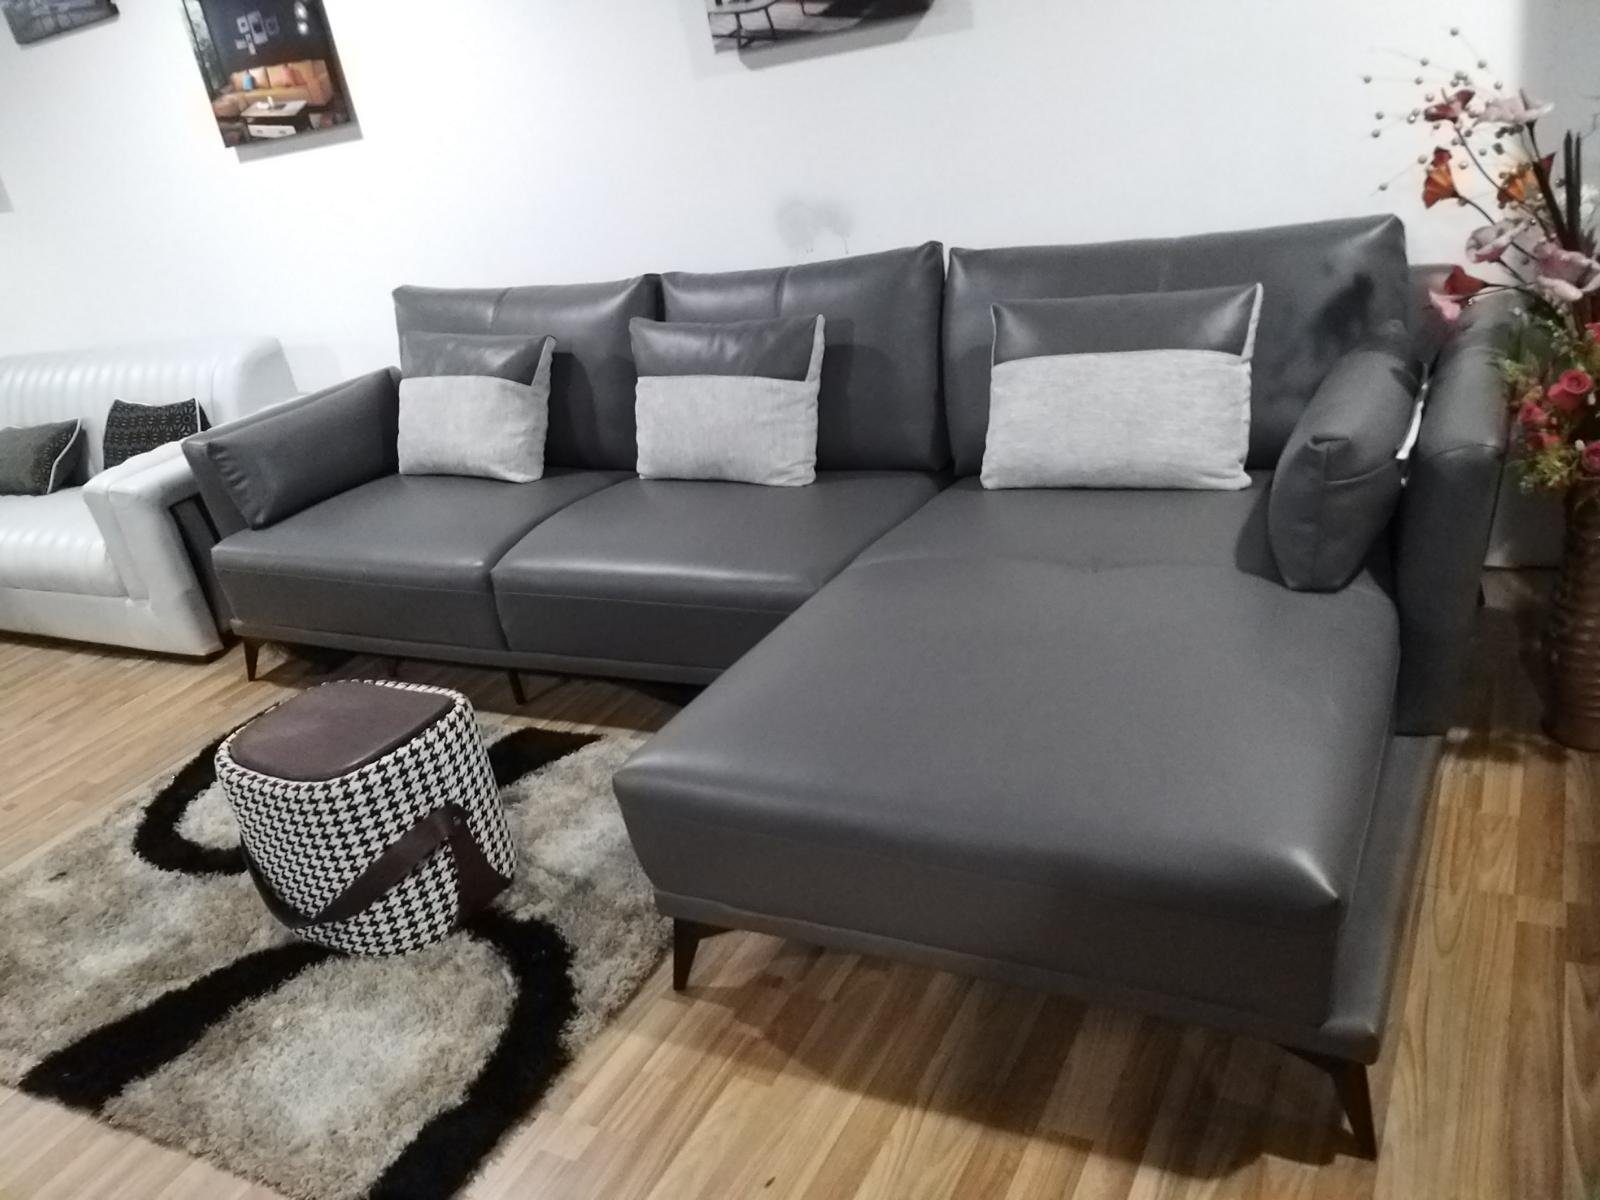 JVmoebel Ecksofa Made Sofa Europe in Polster Wohnlandschaft Couch L-Form Garnitur,